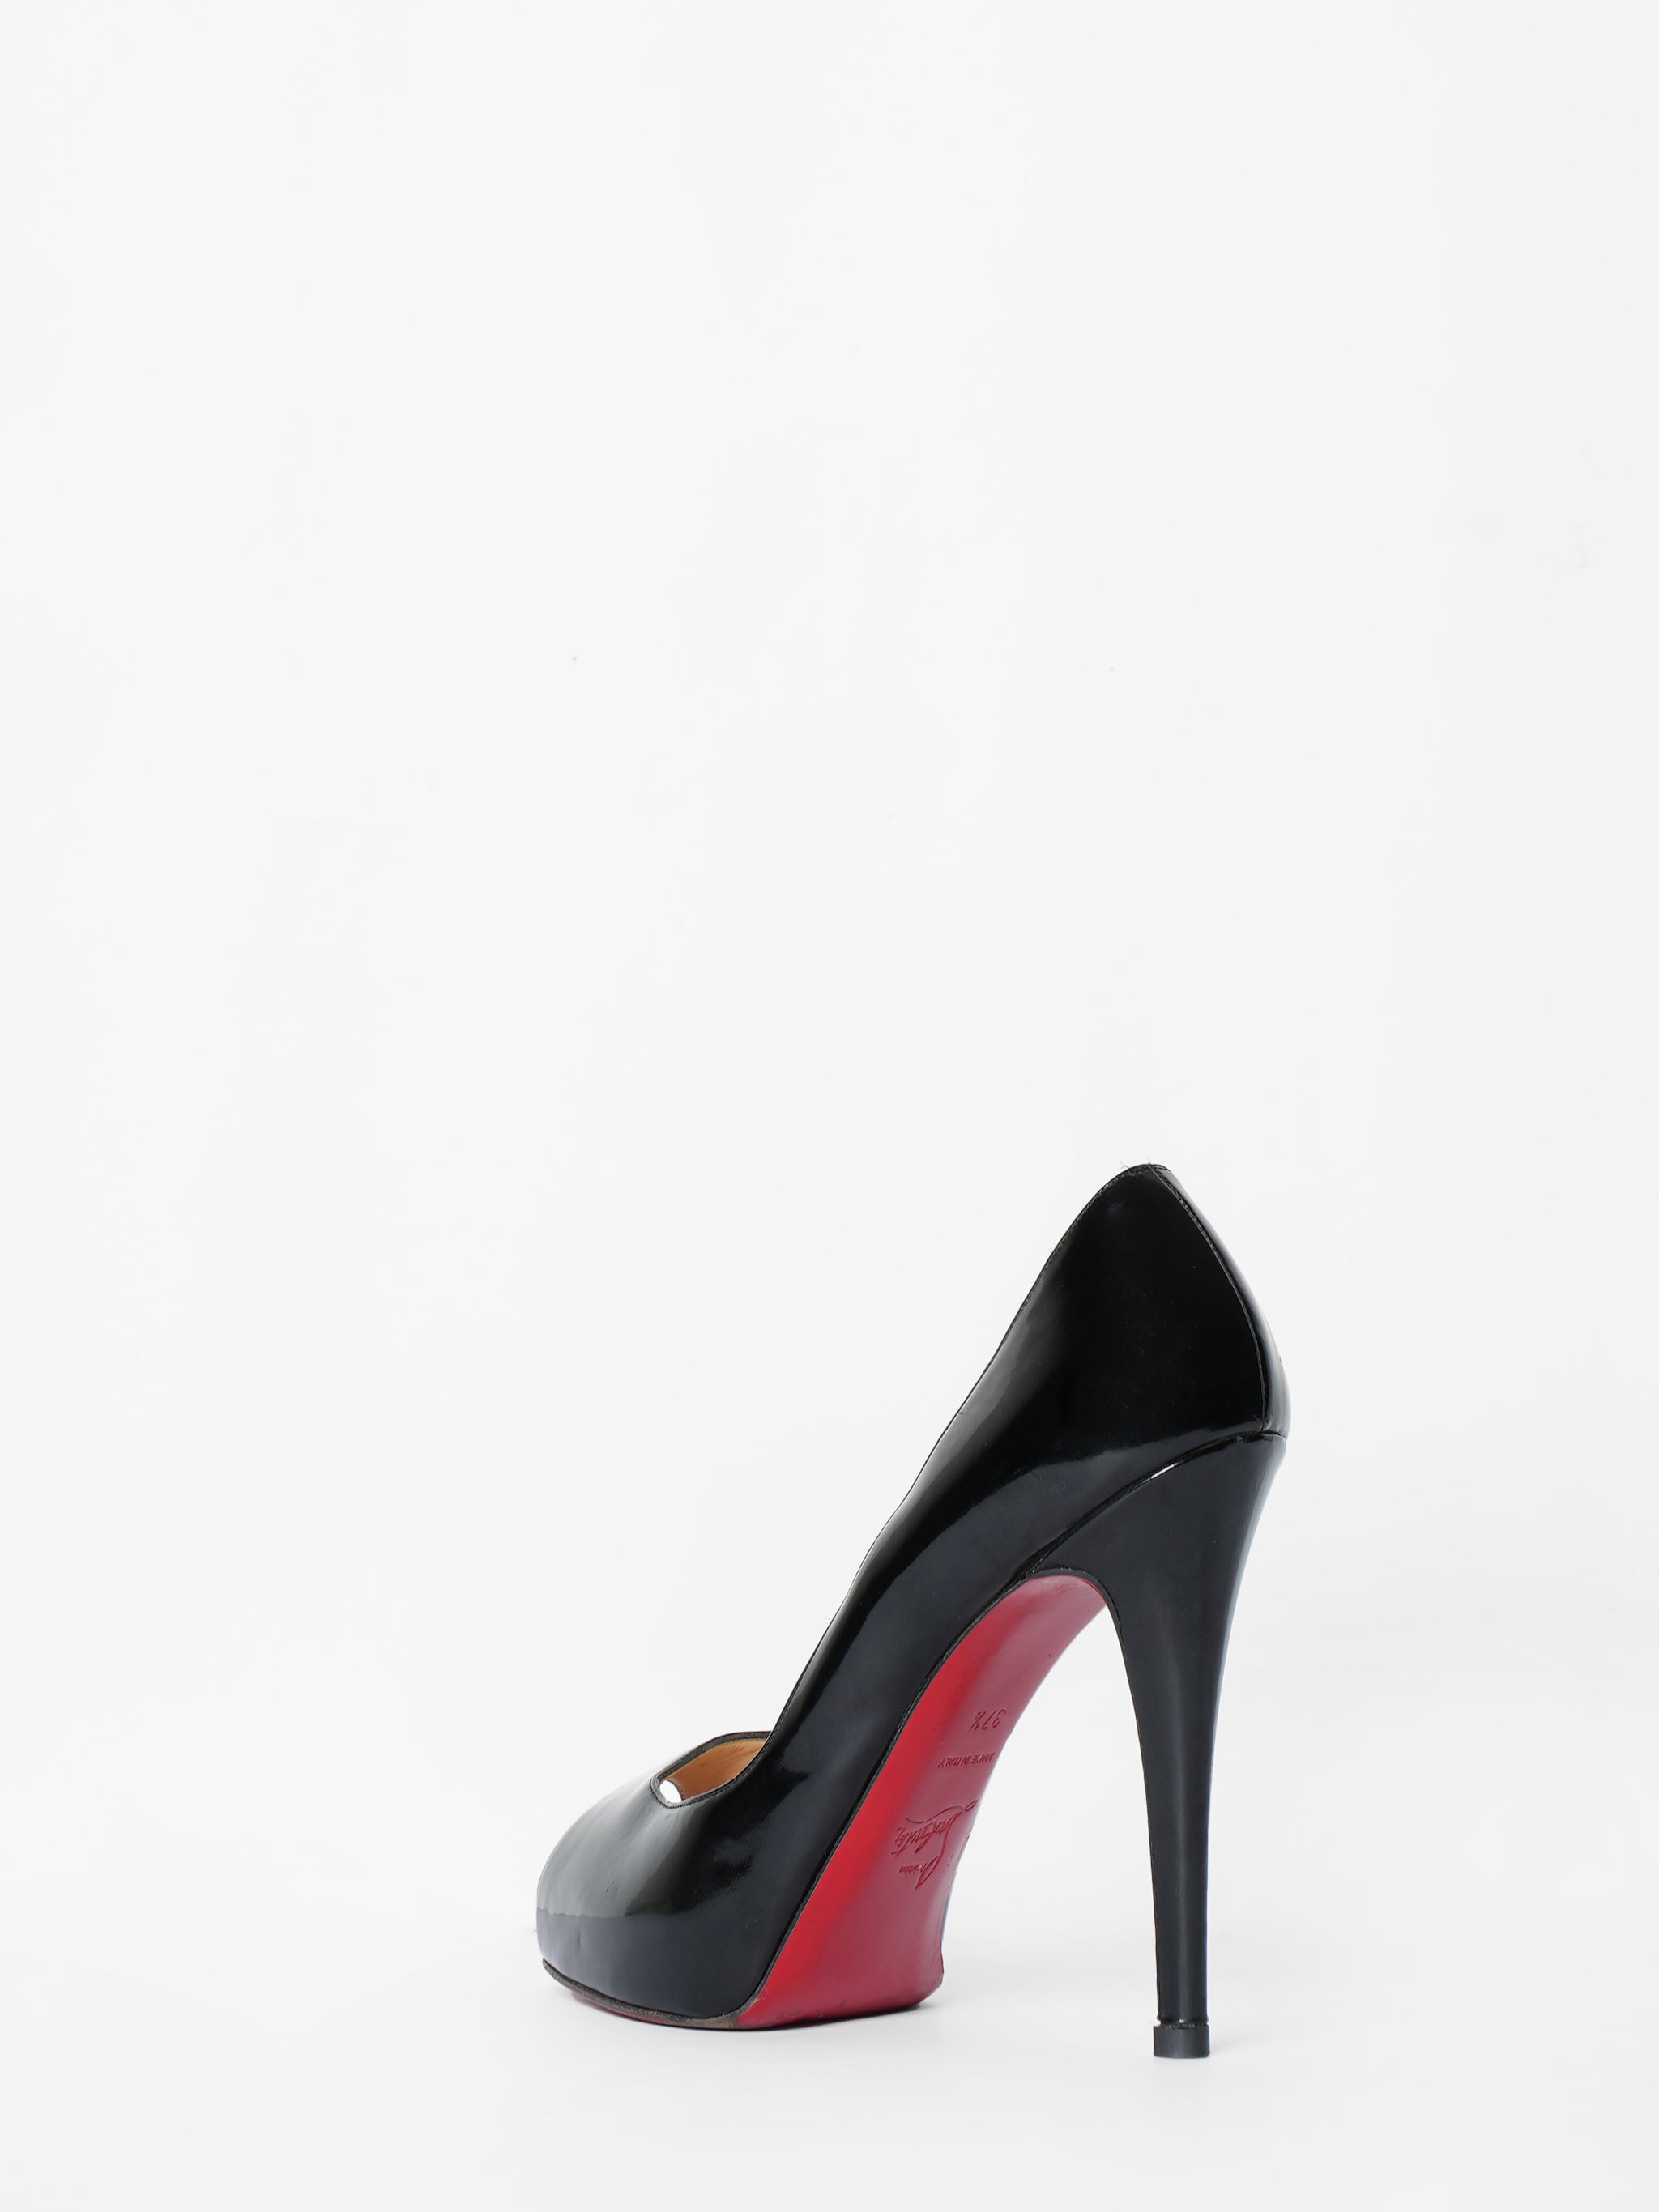 Pleaser Scream 01 Size 6 Black Patent 6.25“ High Heel Fetish Shoes | eBay